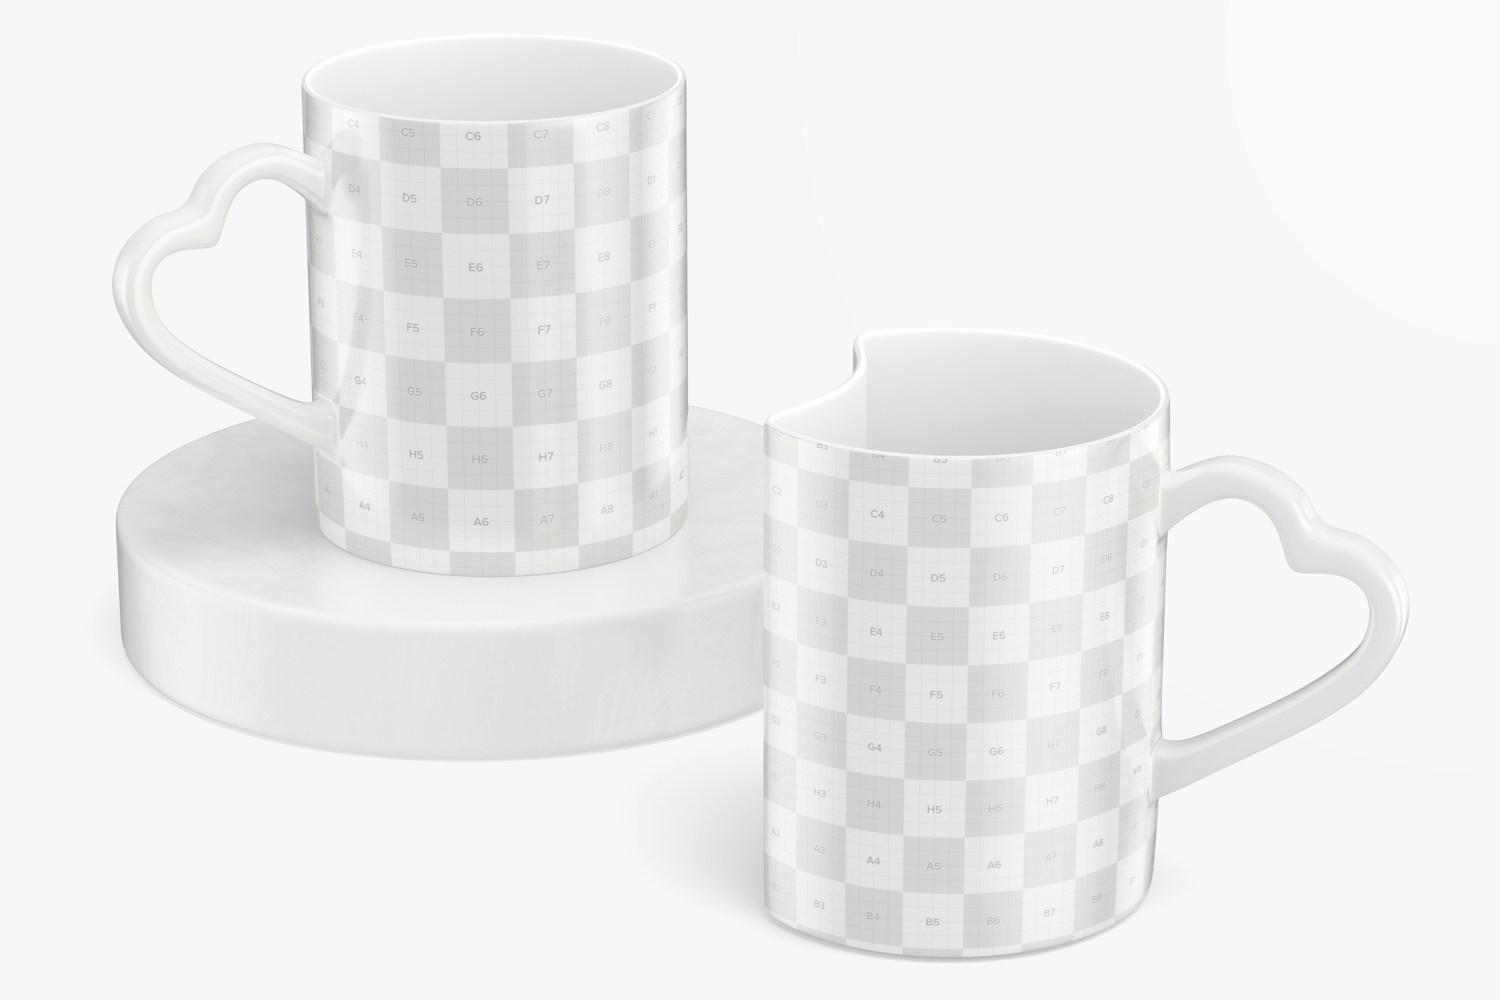 Matching Mugs Mockup, Perspective